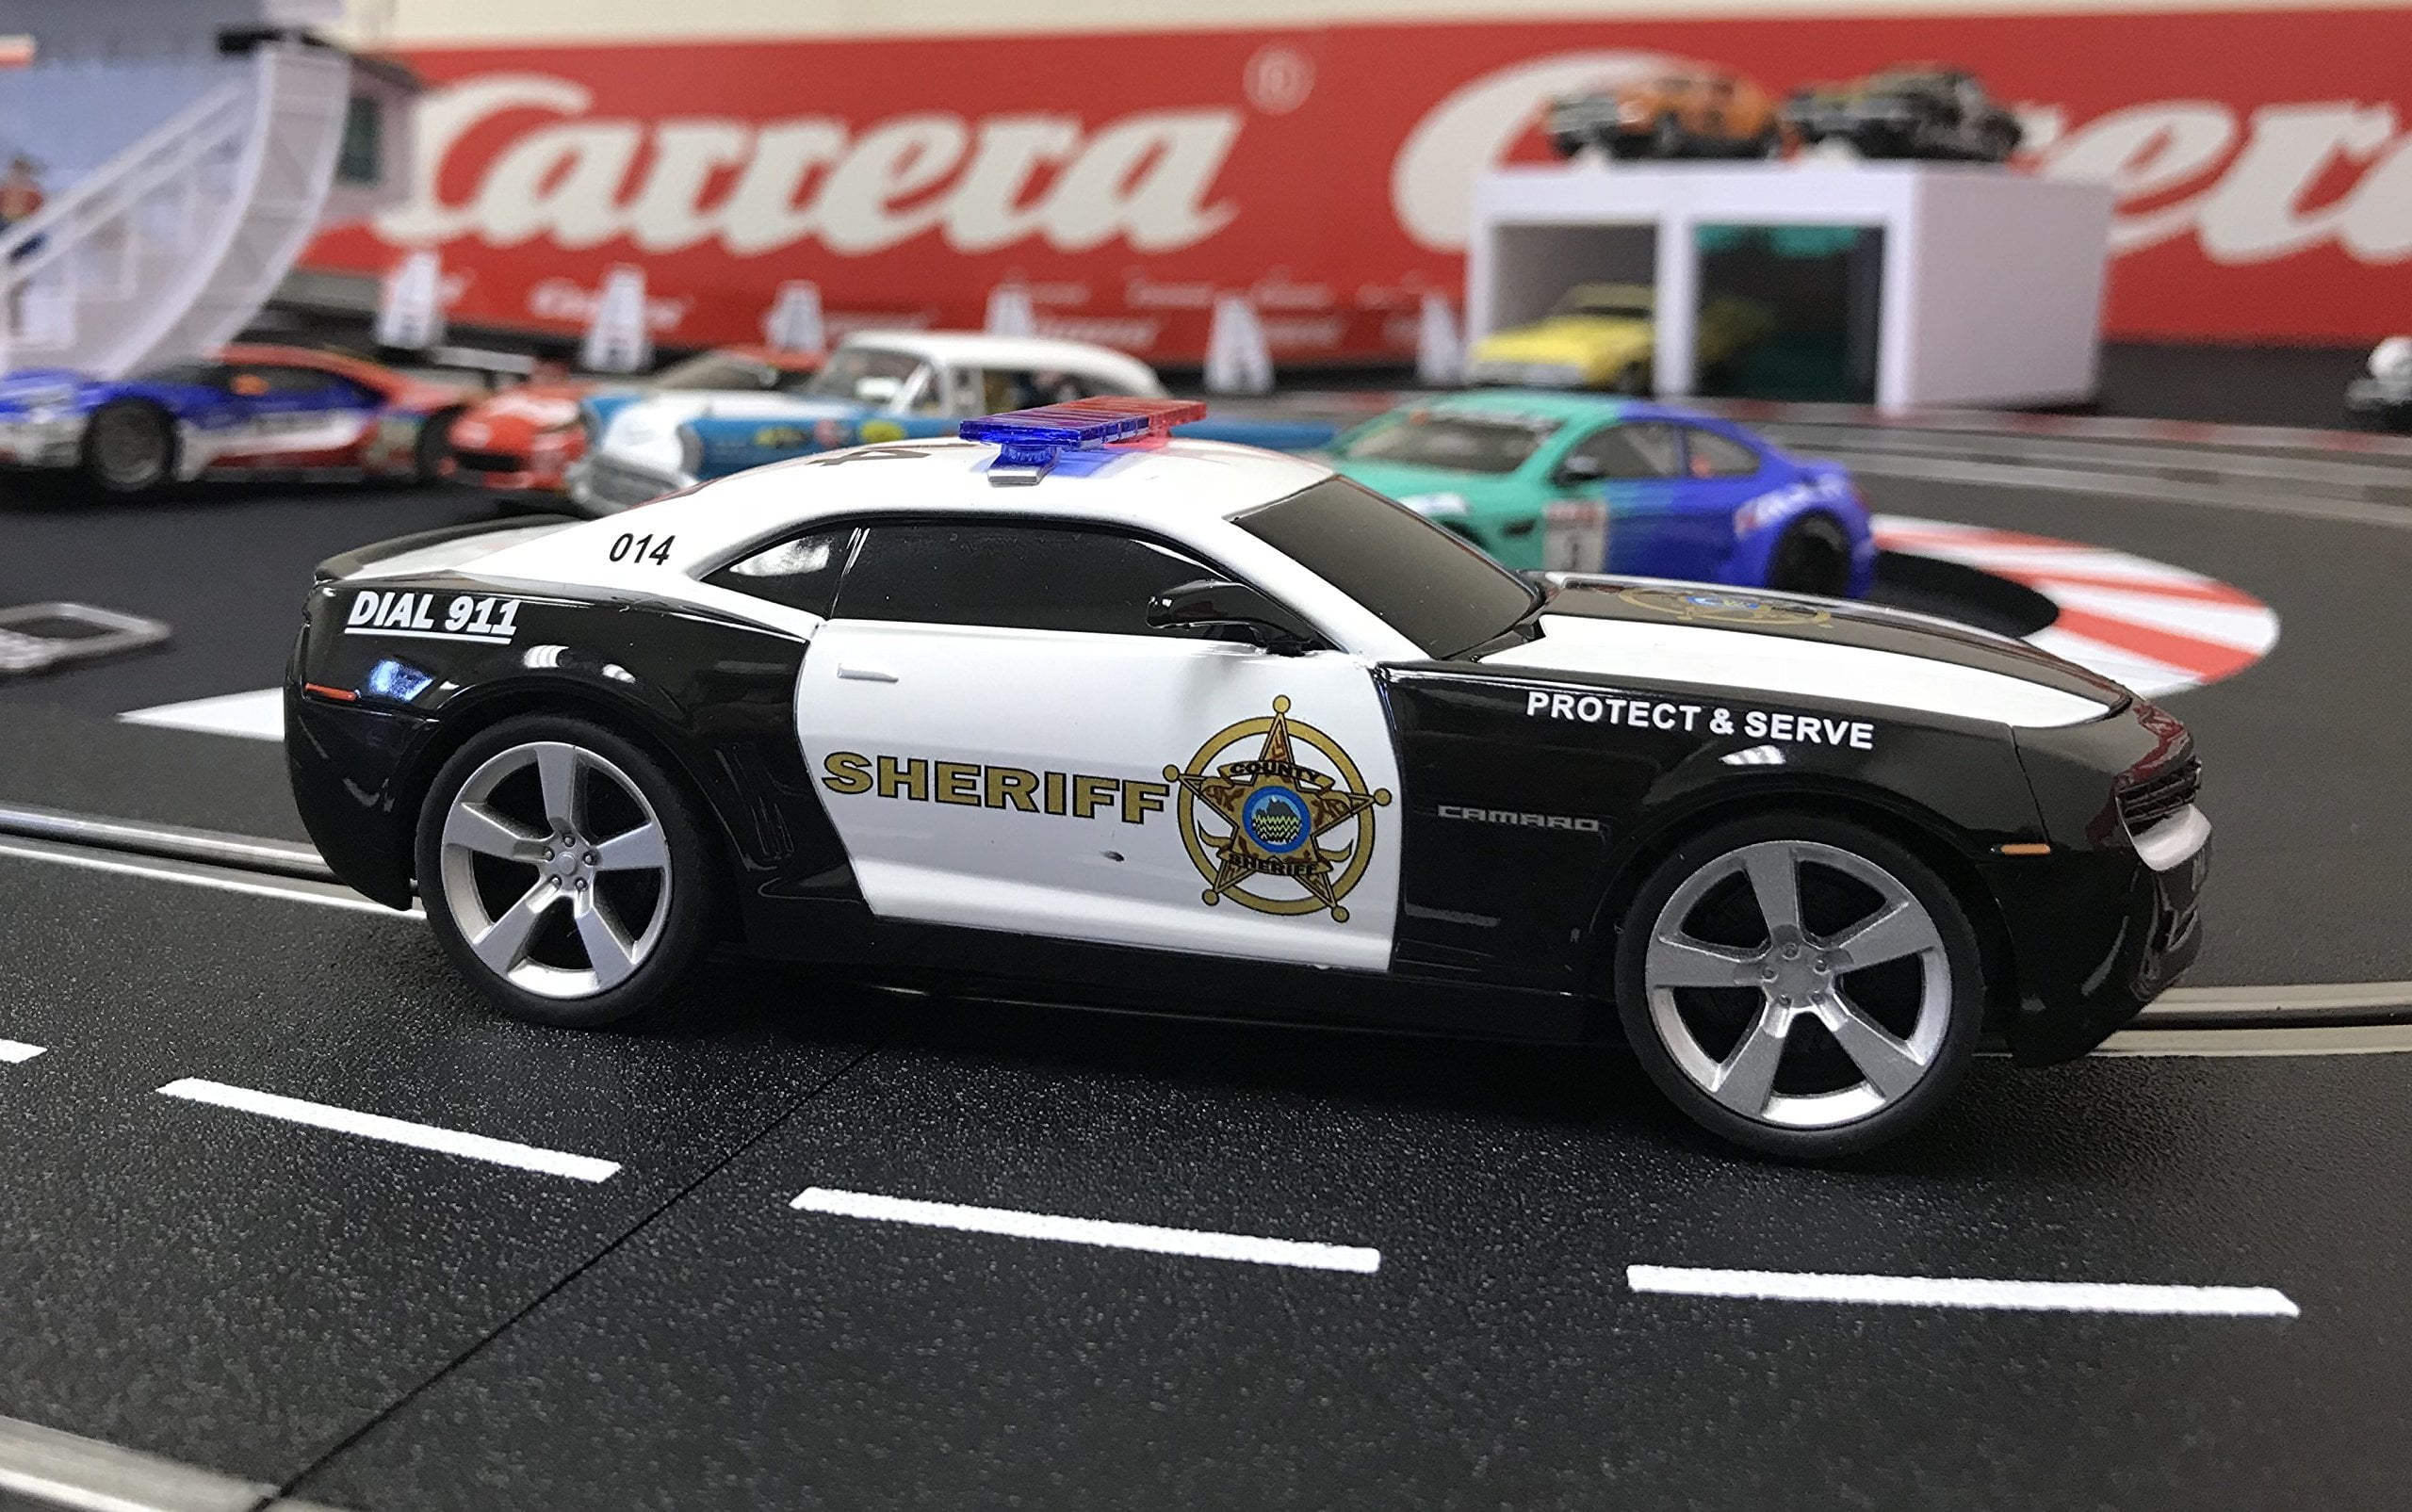 Carrera 30756 Digital 132 Slot Car Racing Vehicle 1:32 Scale - Chevrolet  Camaro Sheriff 